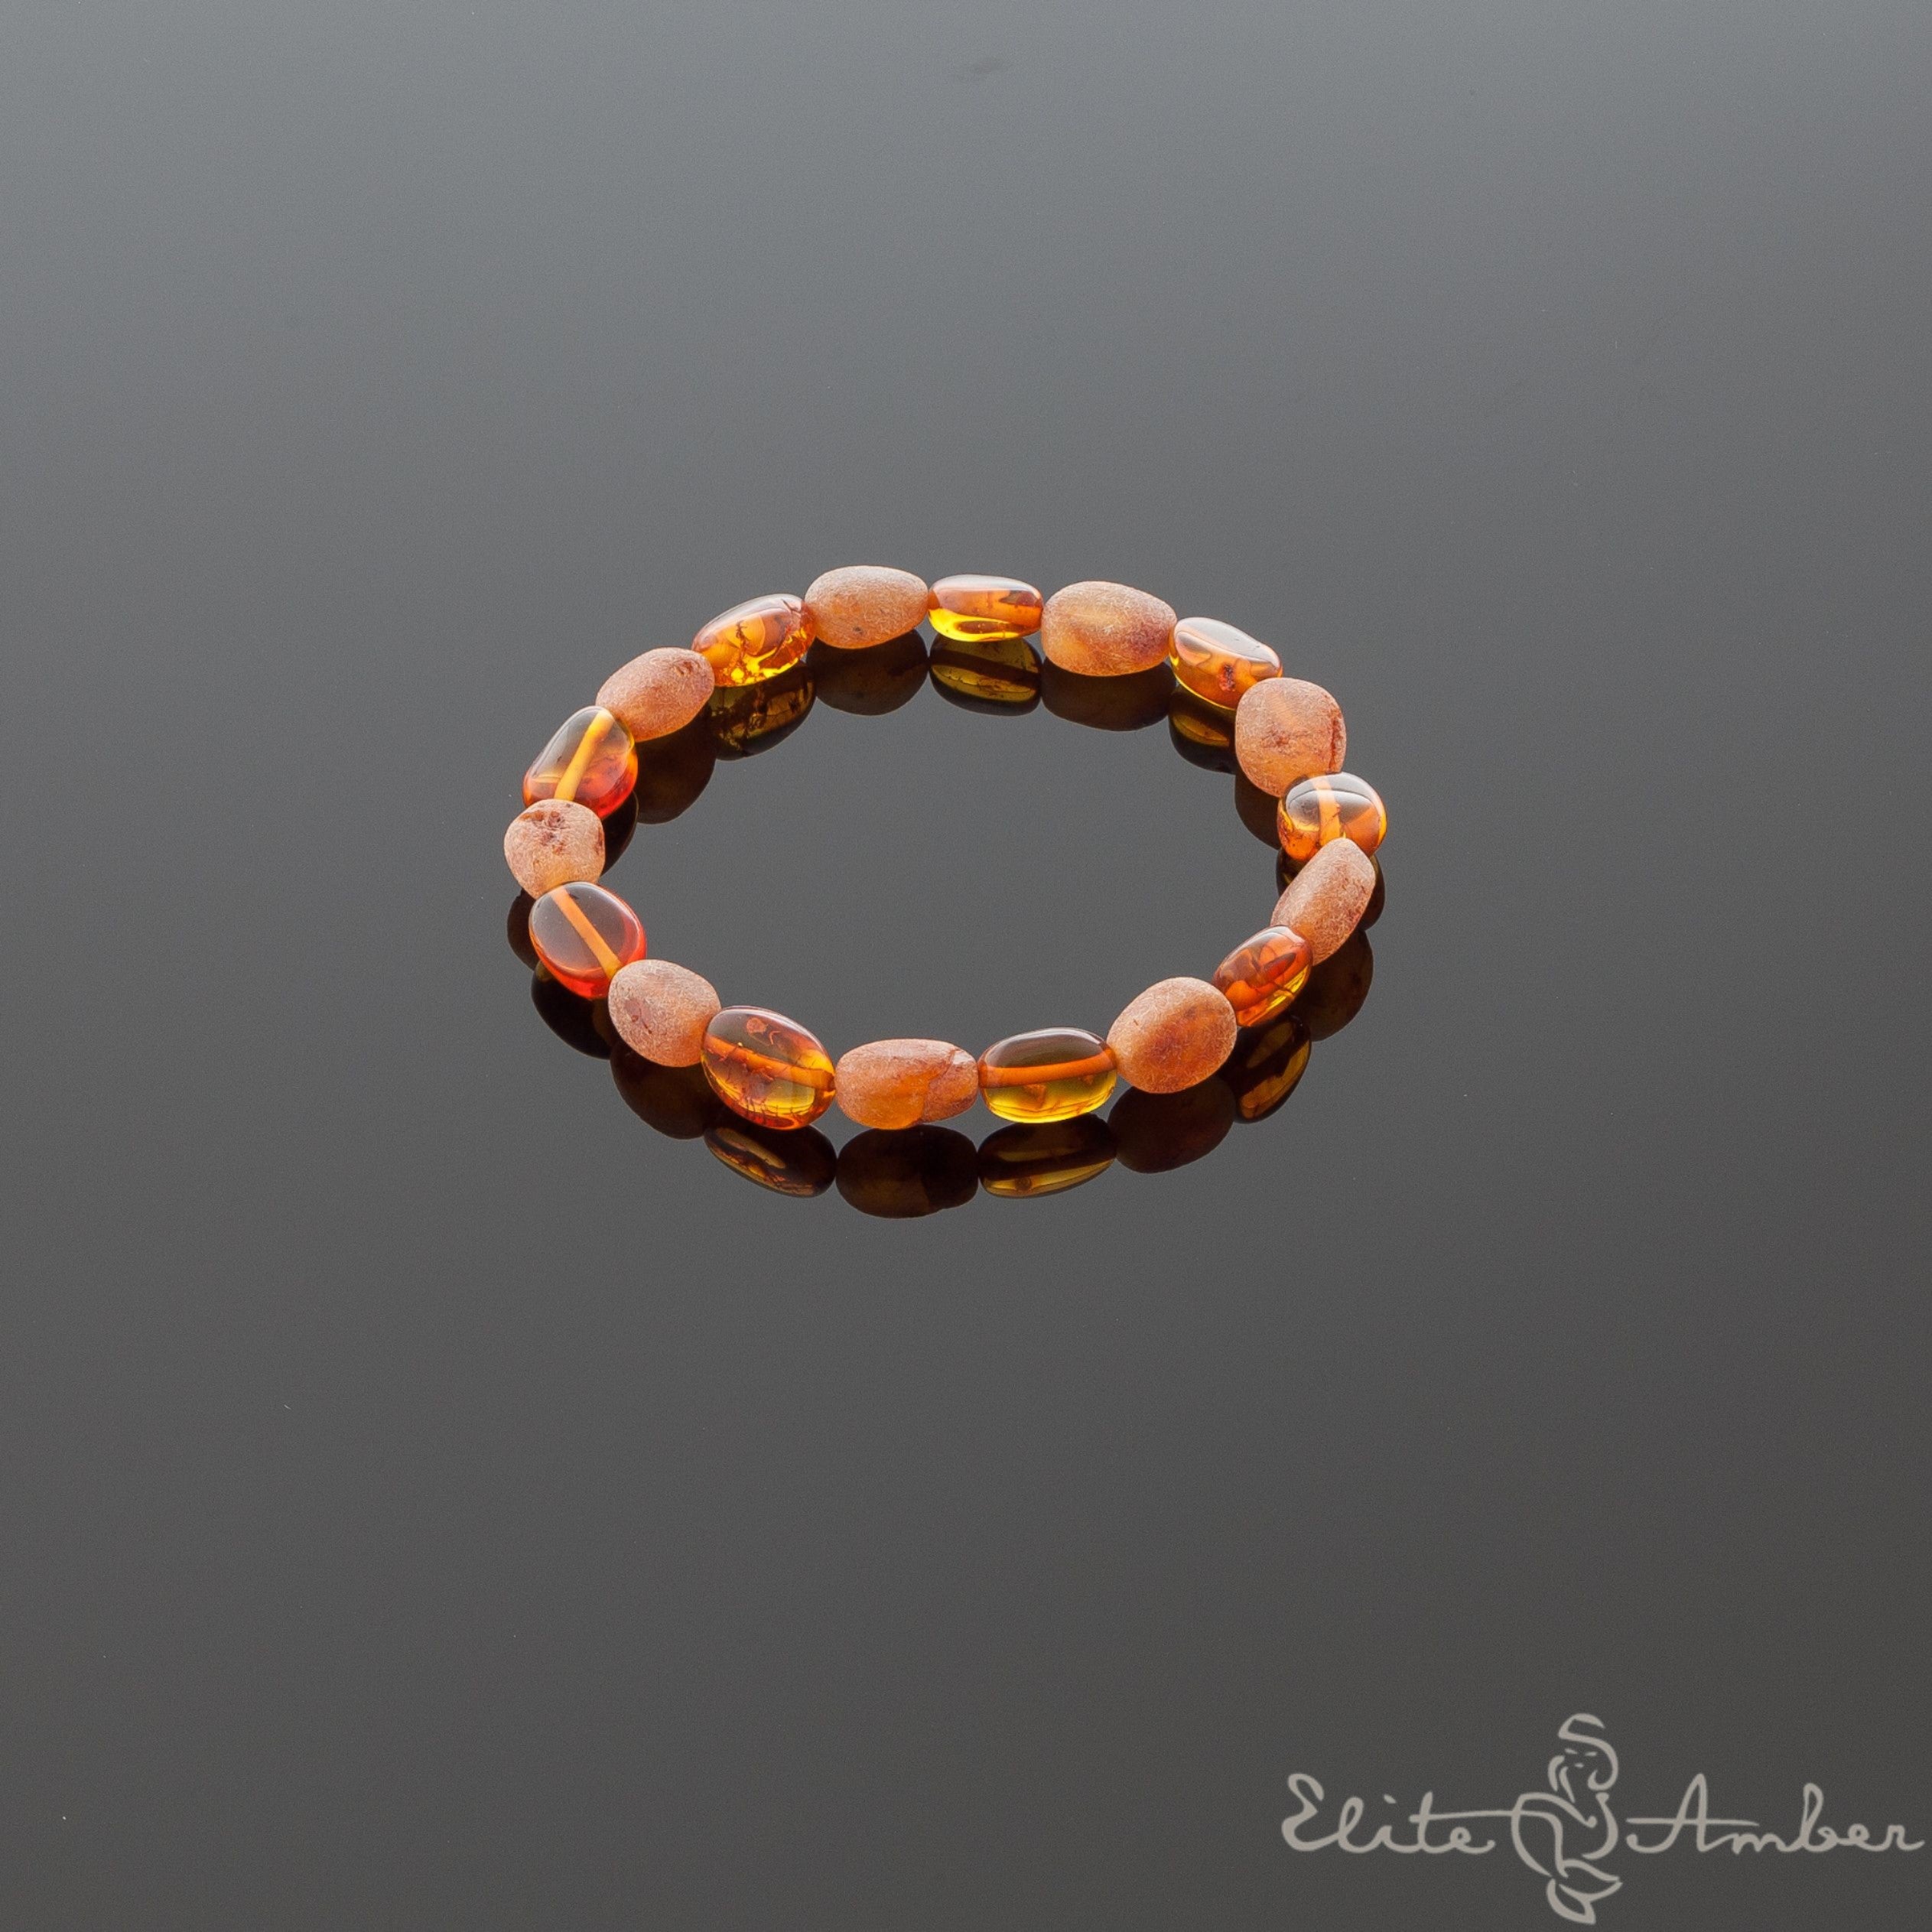 Amber bracelet "Polished and raw amber pebbles"